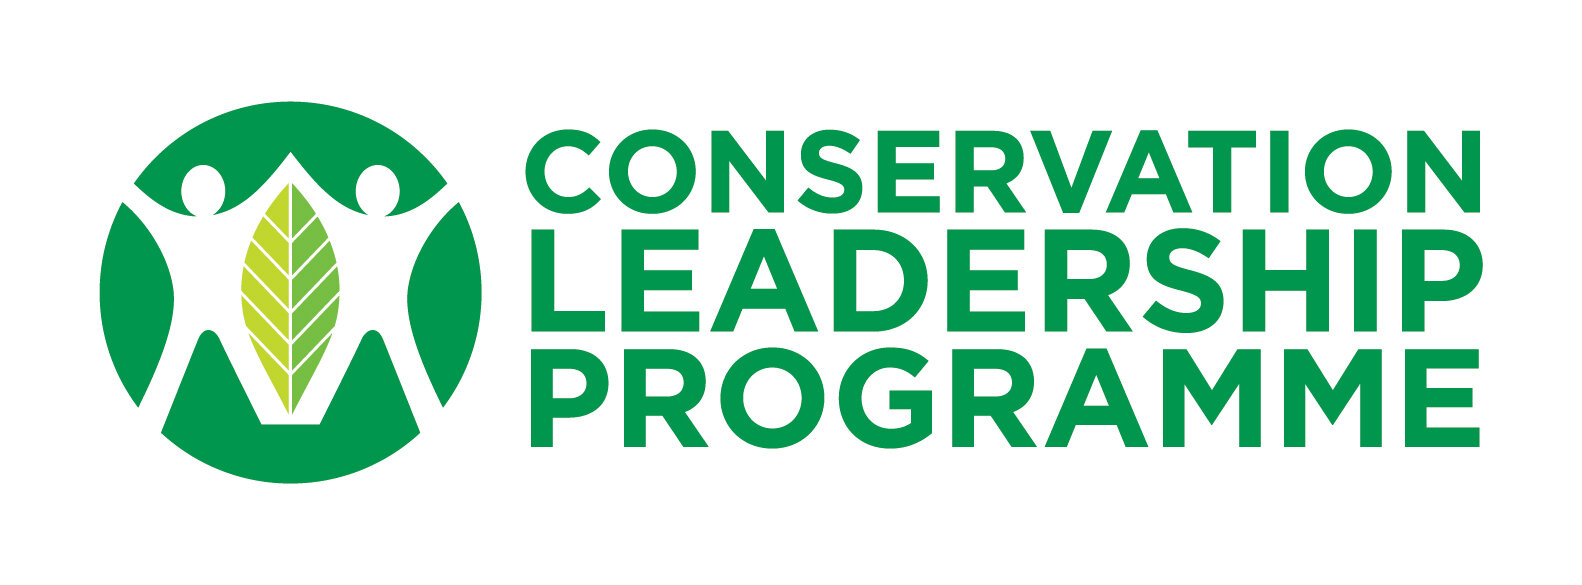 Conservation Leadership Programme.jpg